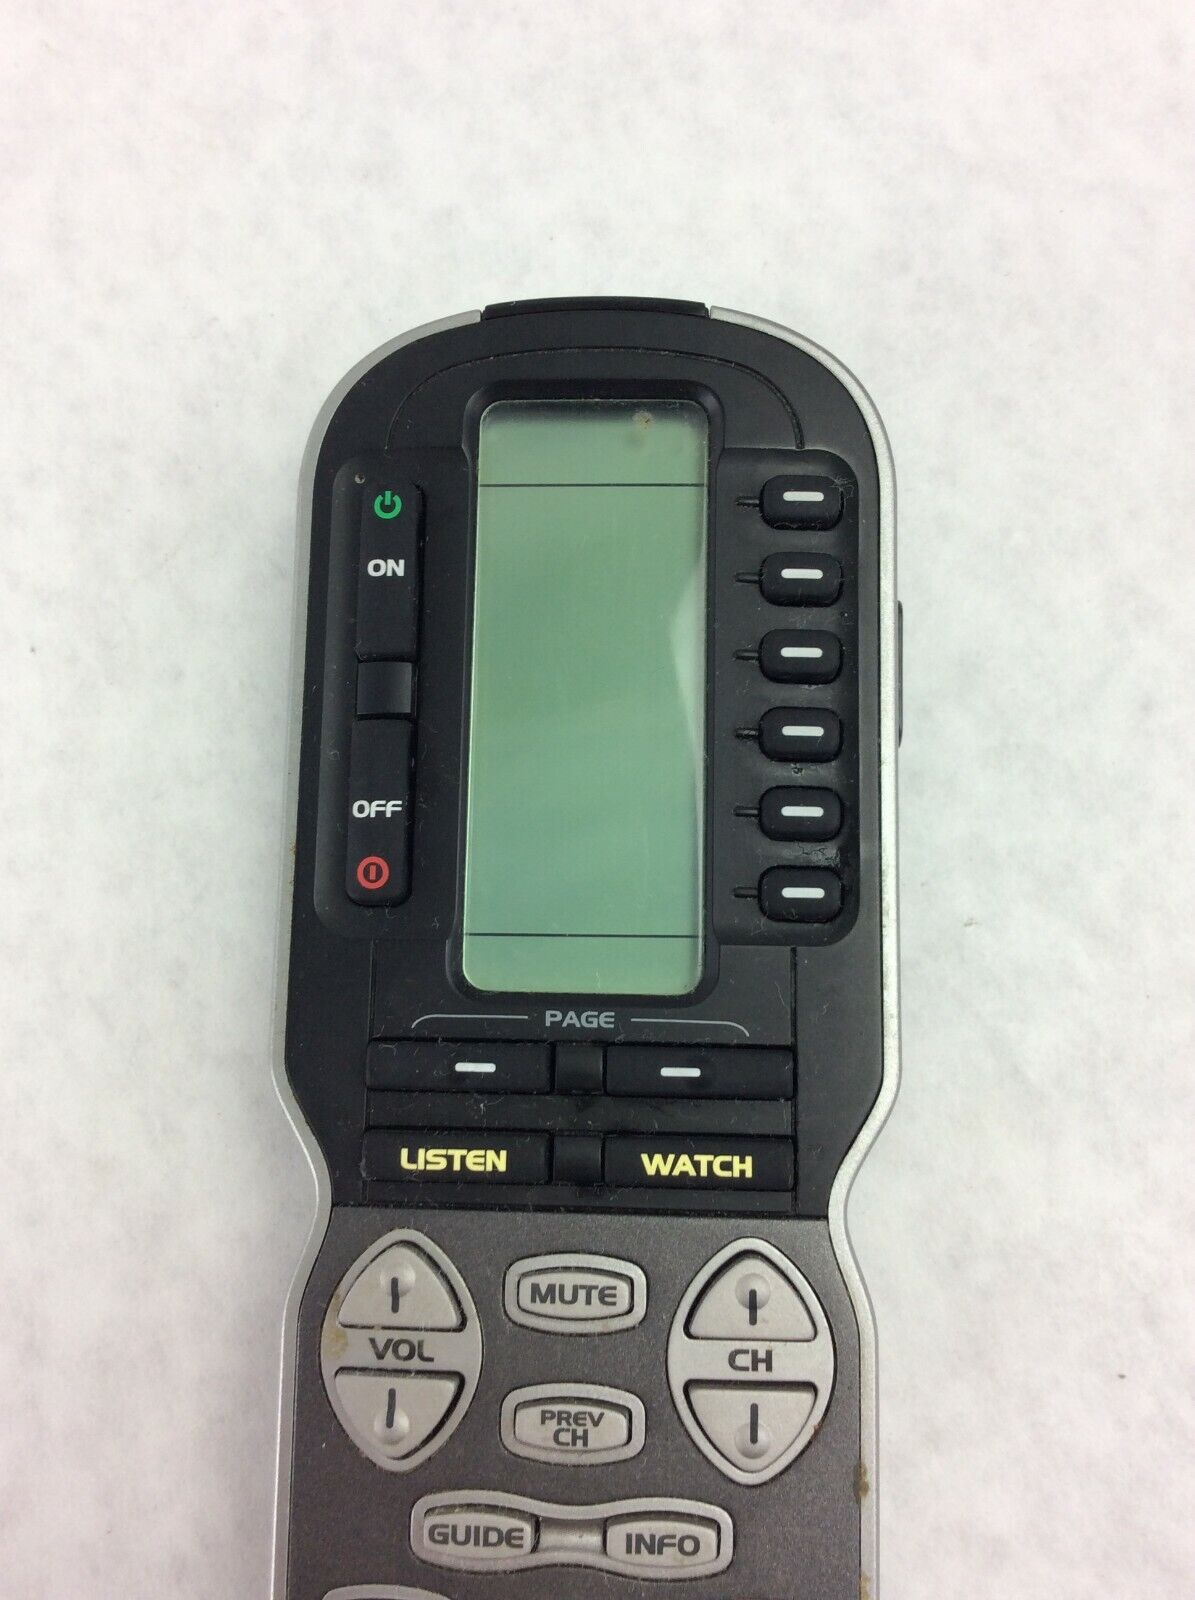 Genesis Universal Remote MX-900 Programmable